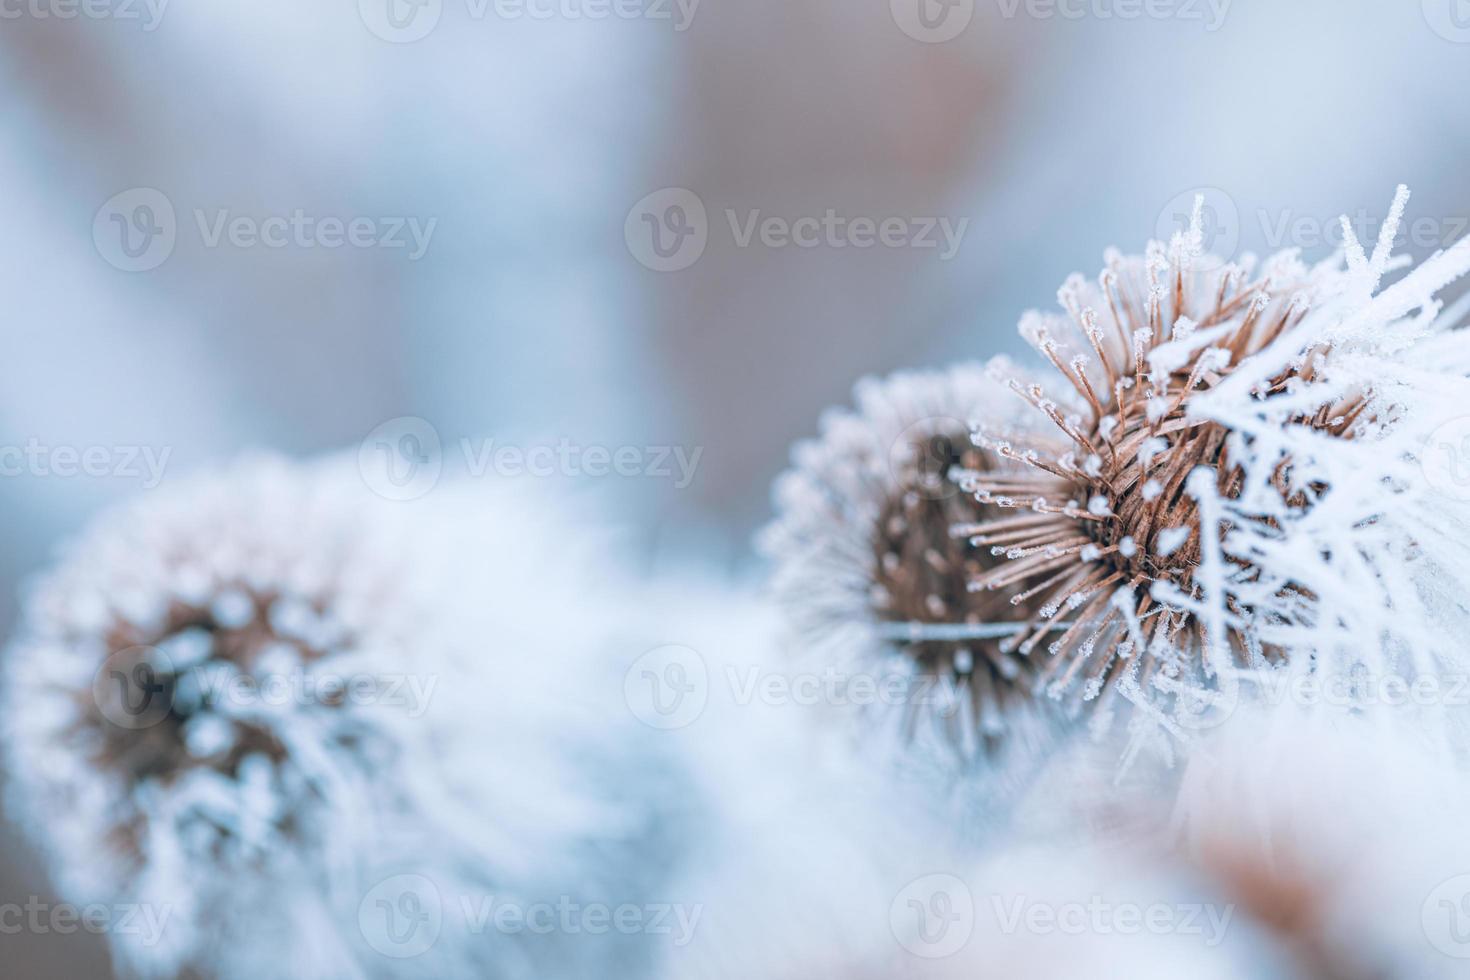 Frozen plants in winter with the hoarfrost. Turquoise winter plants in the rays of sunlight. Winter scene. Backlit blurred beauty winter flowers art design. photo